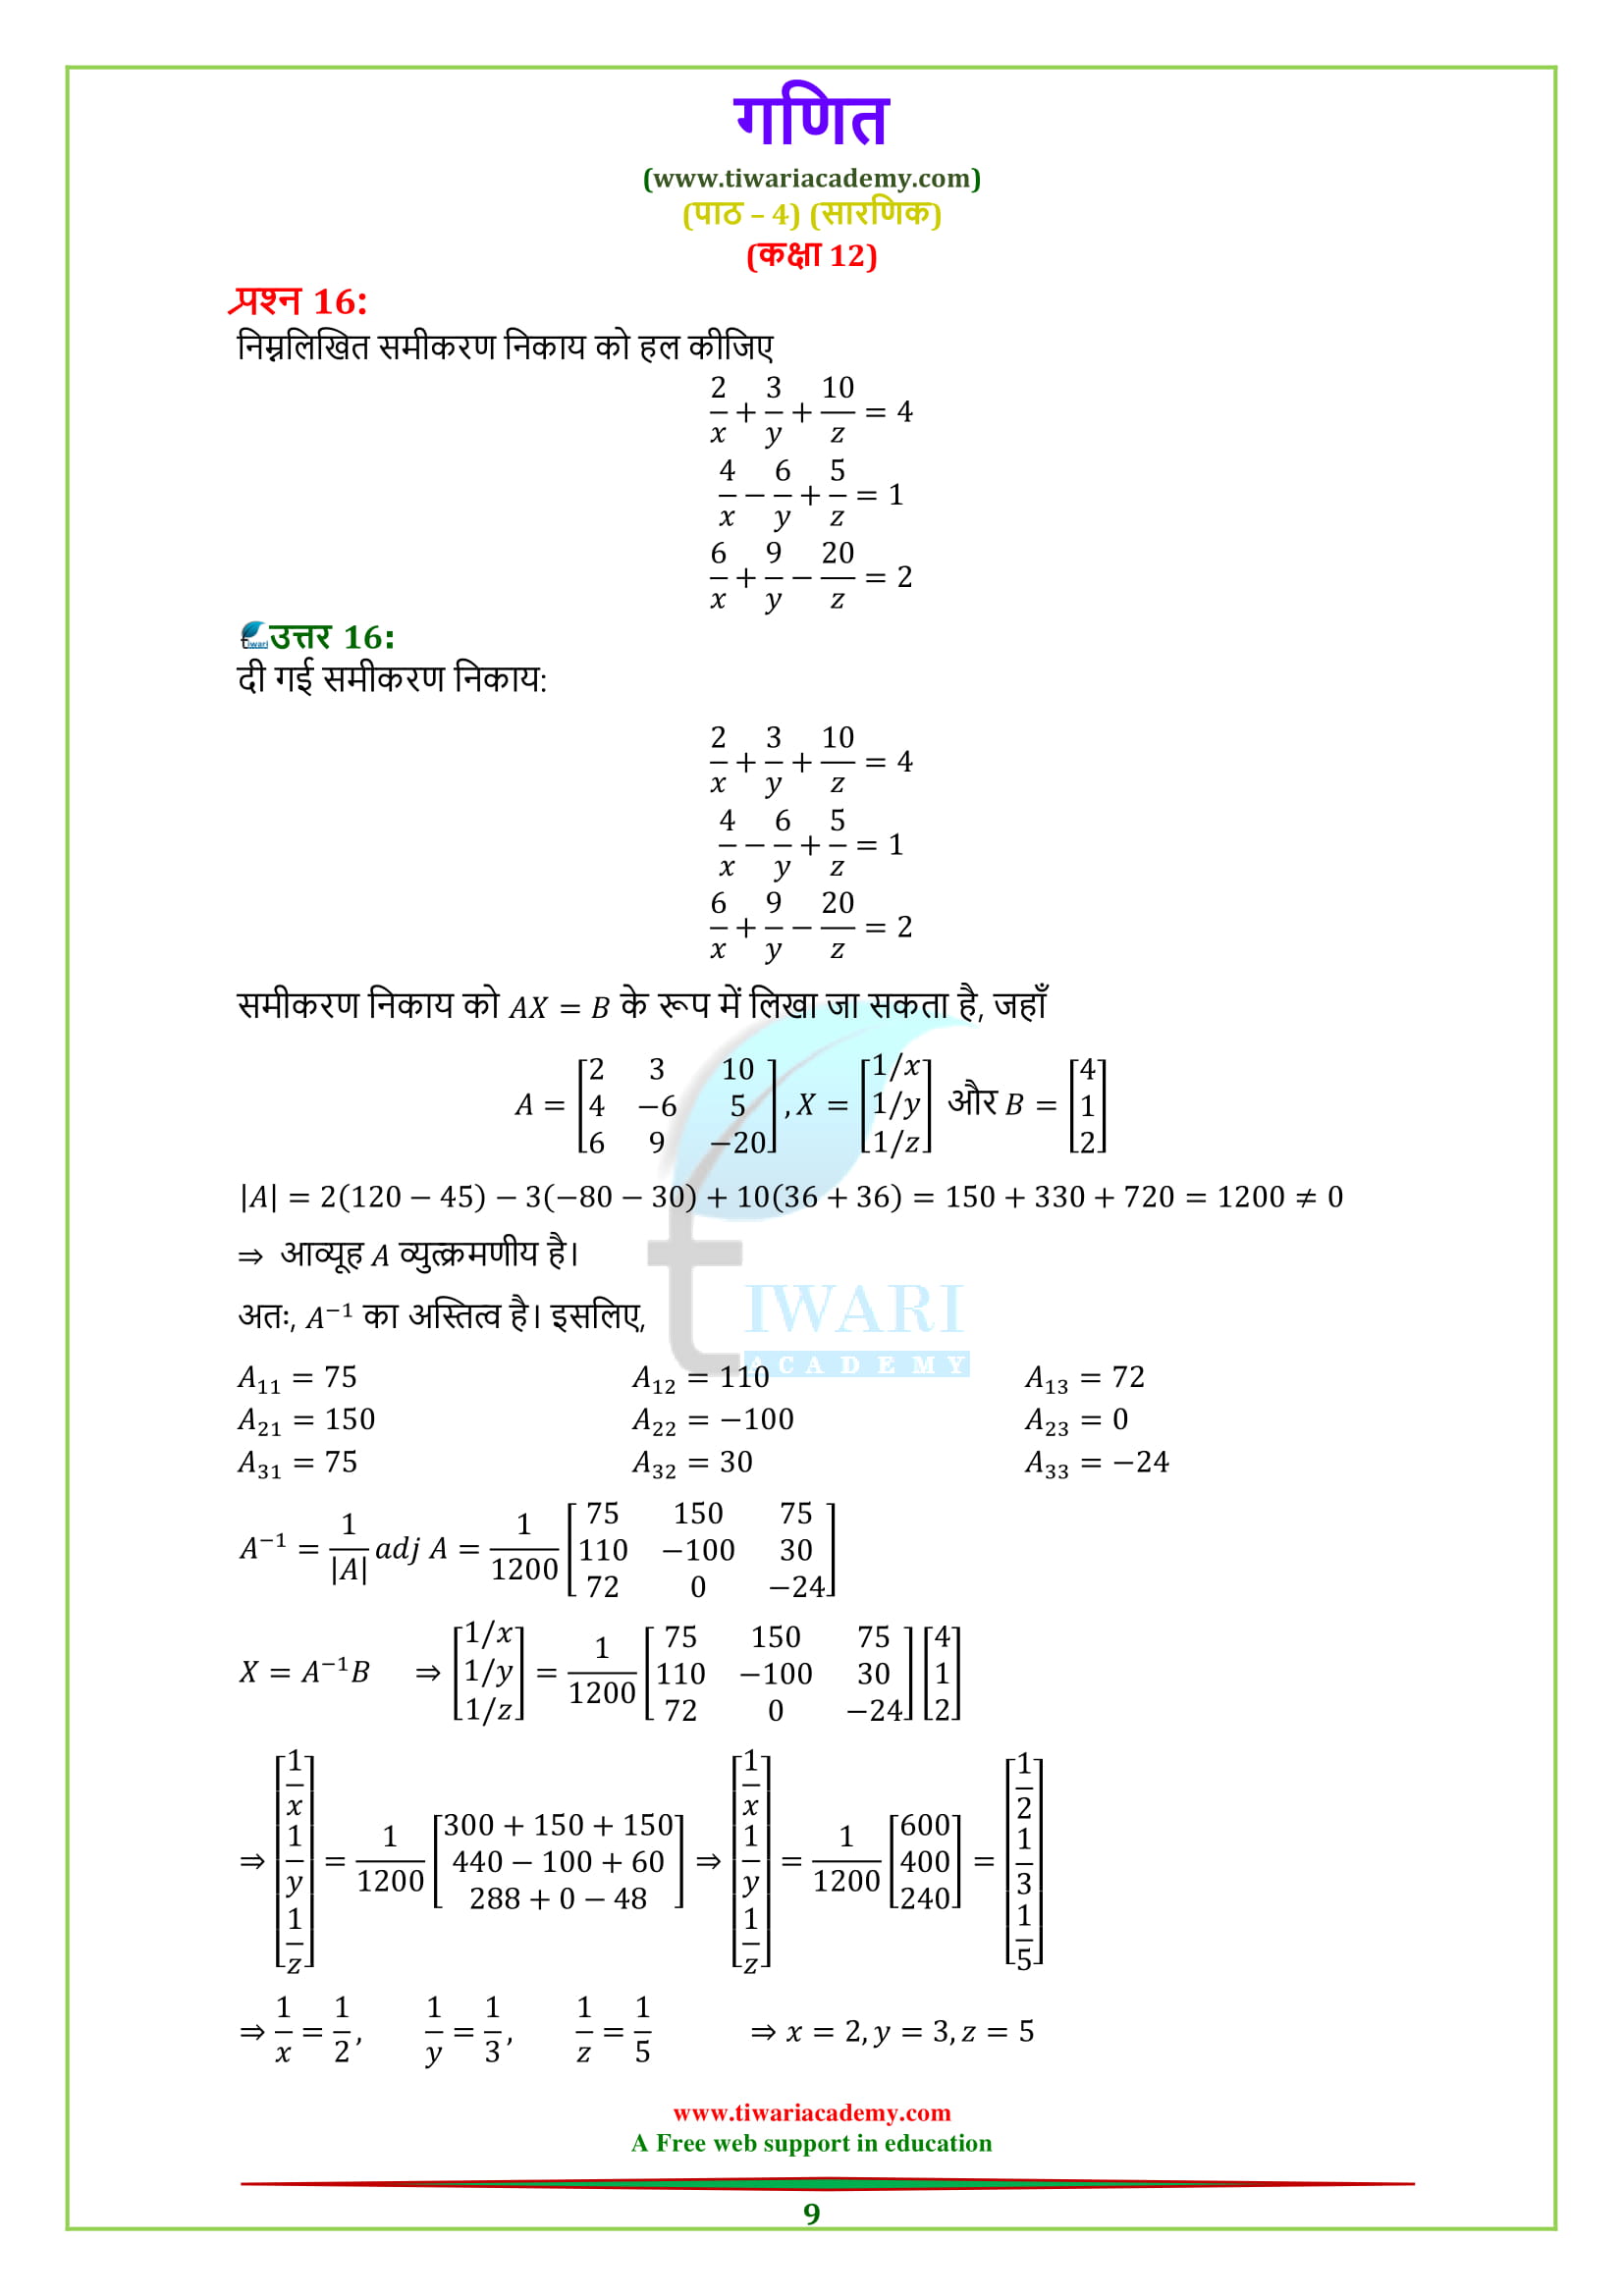 UP Board 12 Maths Chapter 4 Solutions Hindi PDF free